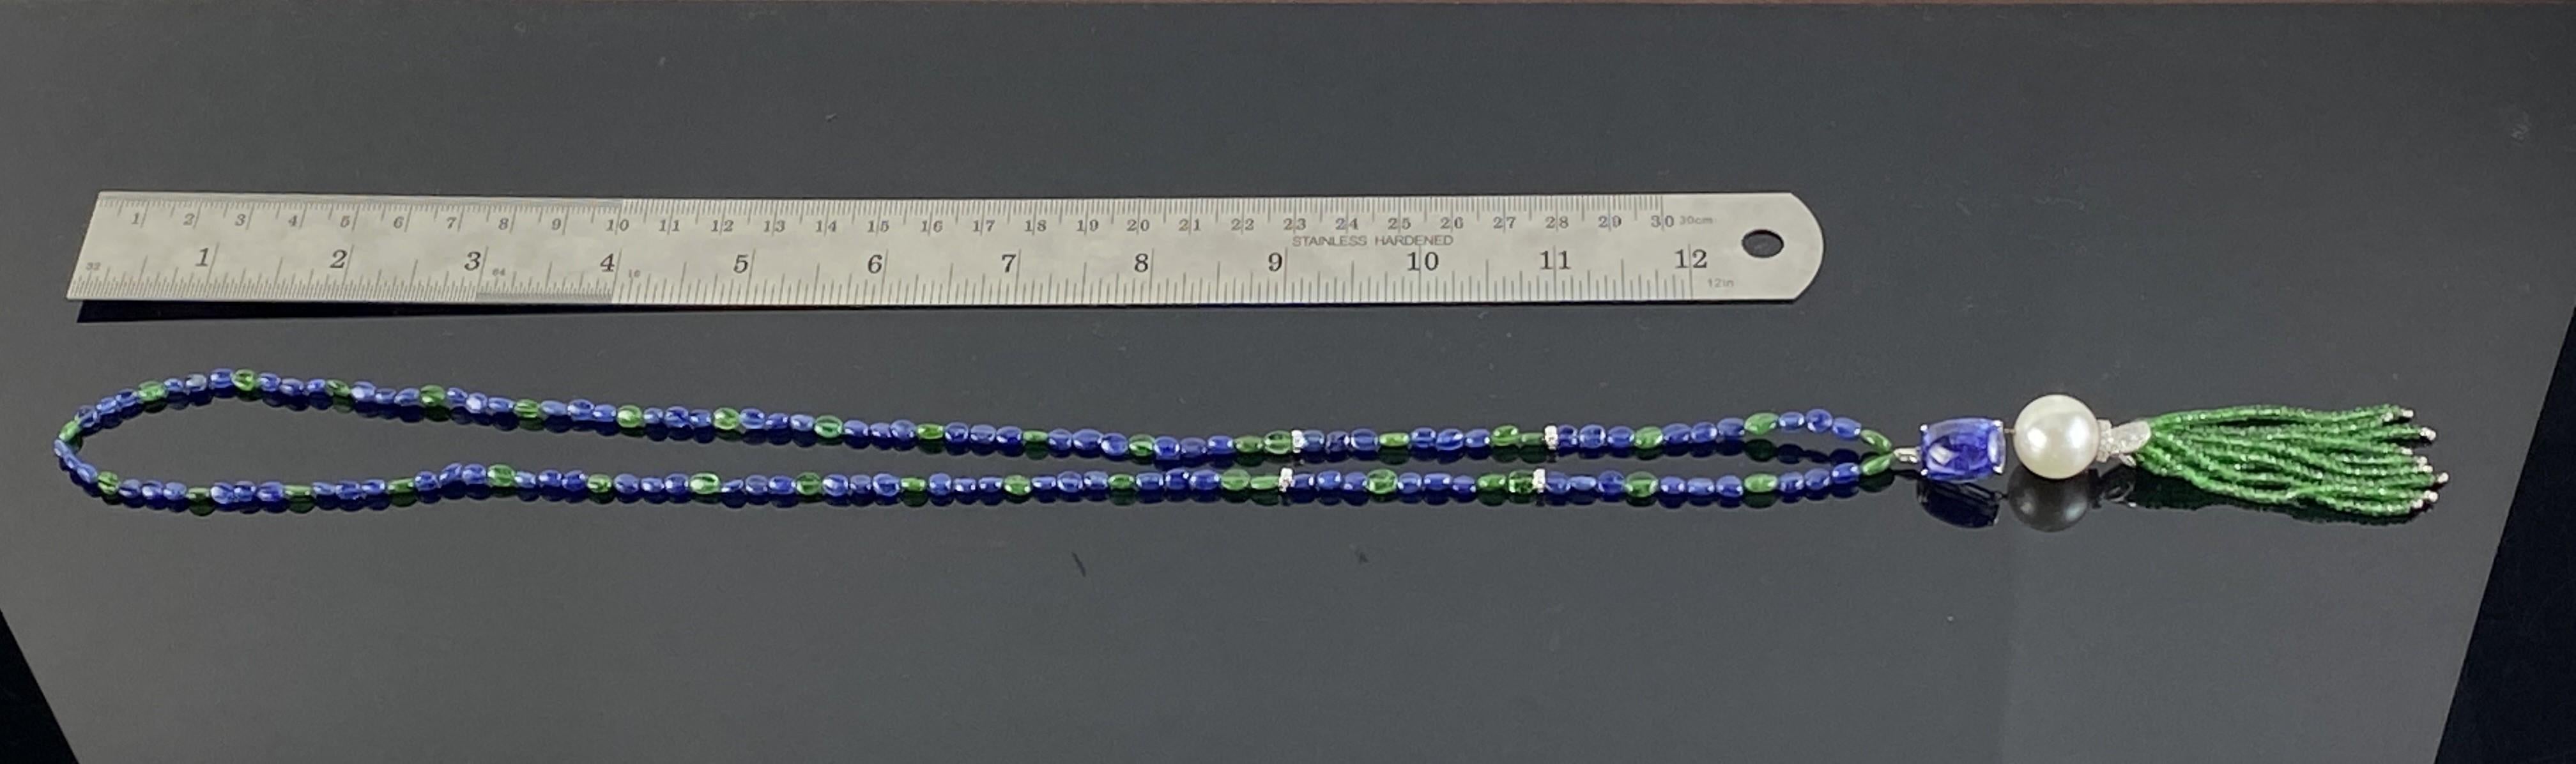 tanzanite beaded necklace